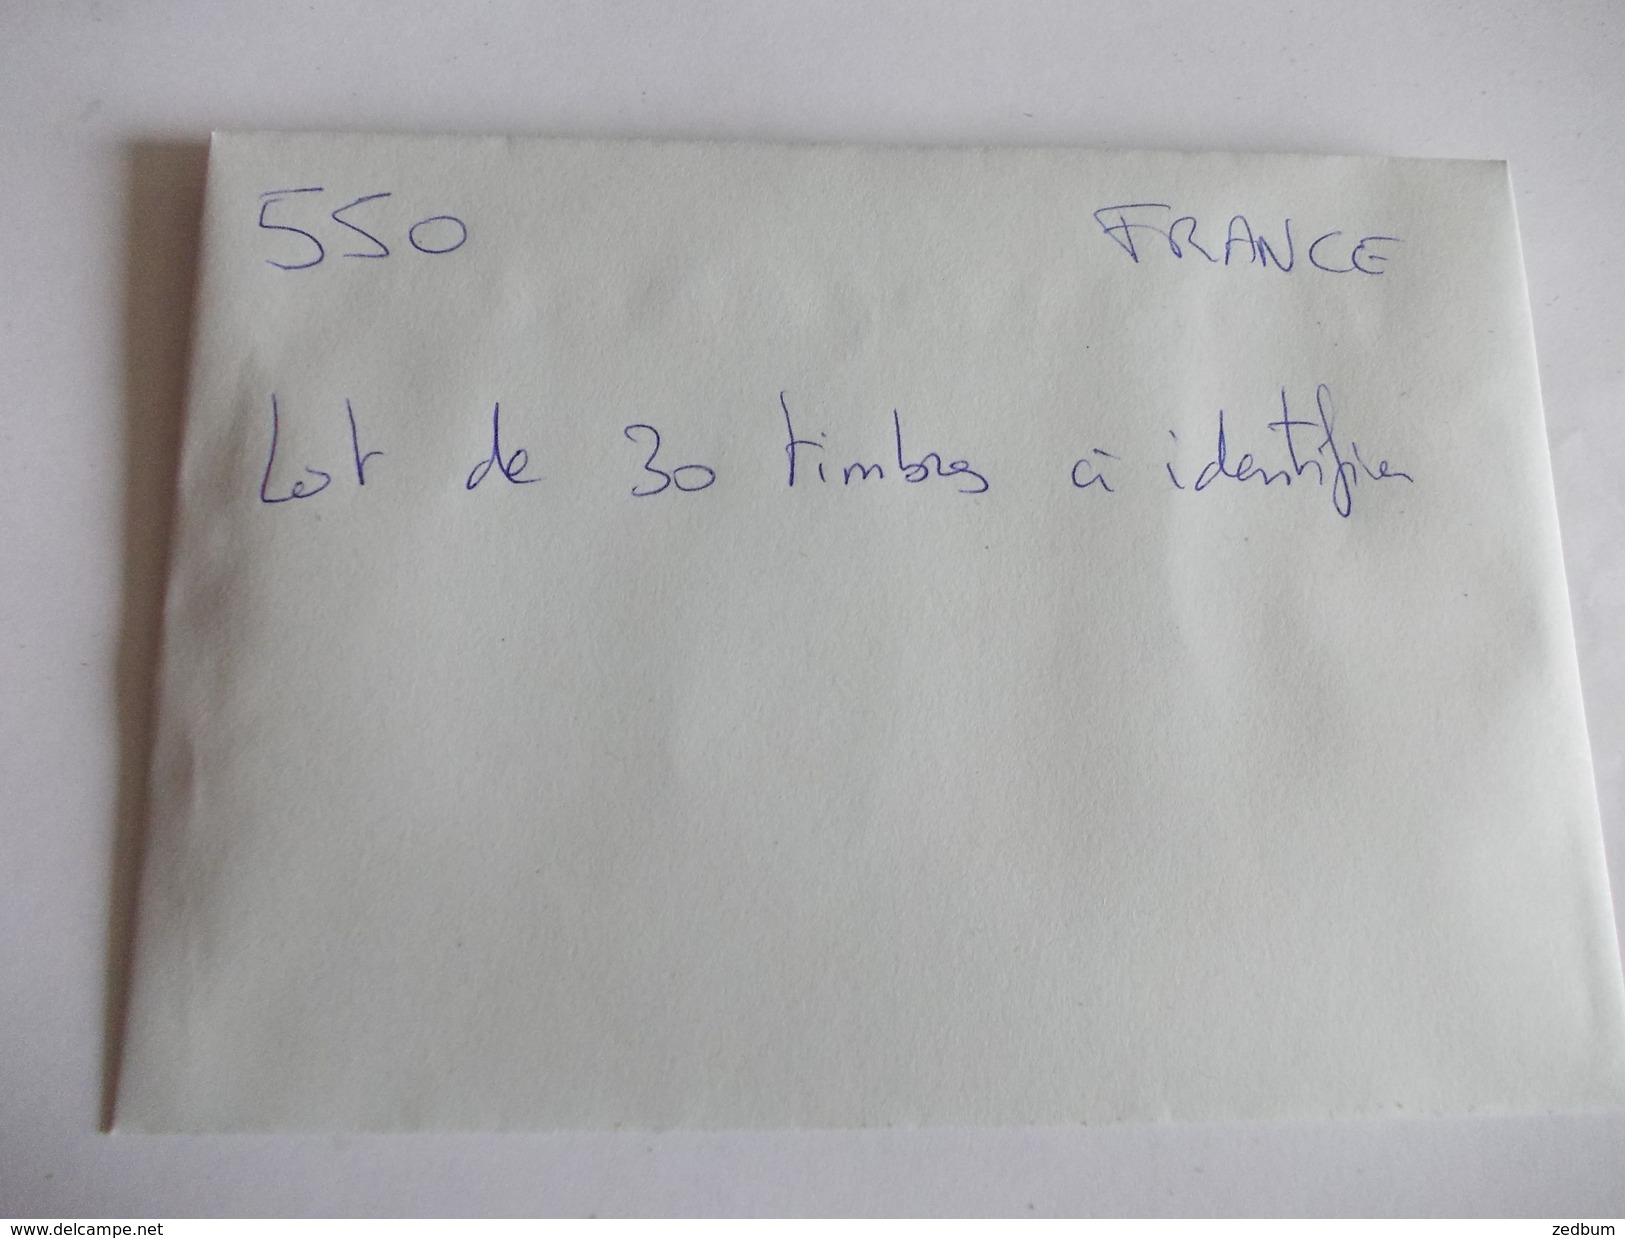 TIMBRE France Lot De 30 Timbres à Identifier N° 550 - Lots & Kiloware (mixtures) - Max. 999 Stamps